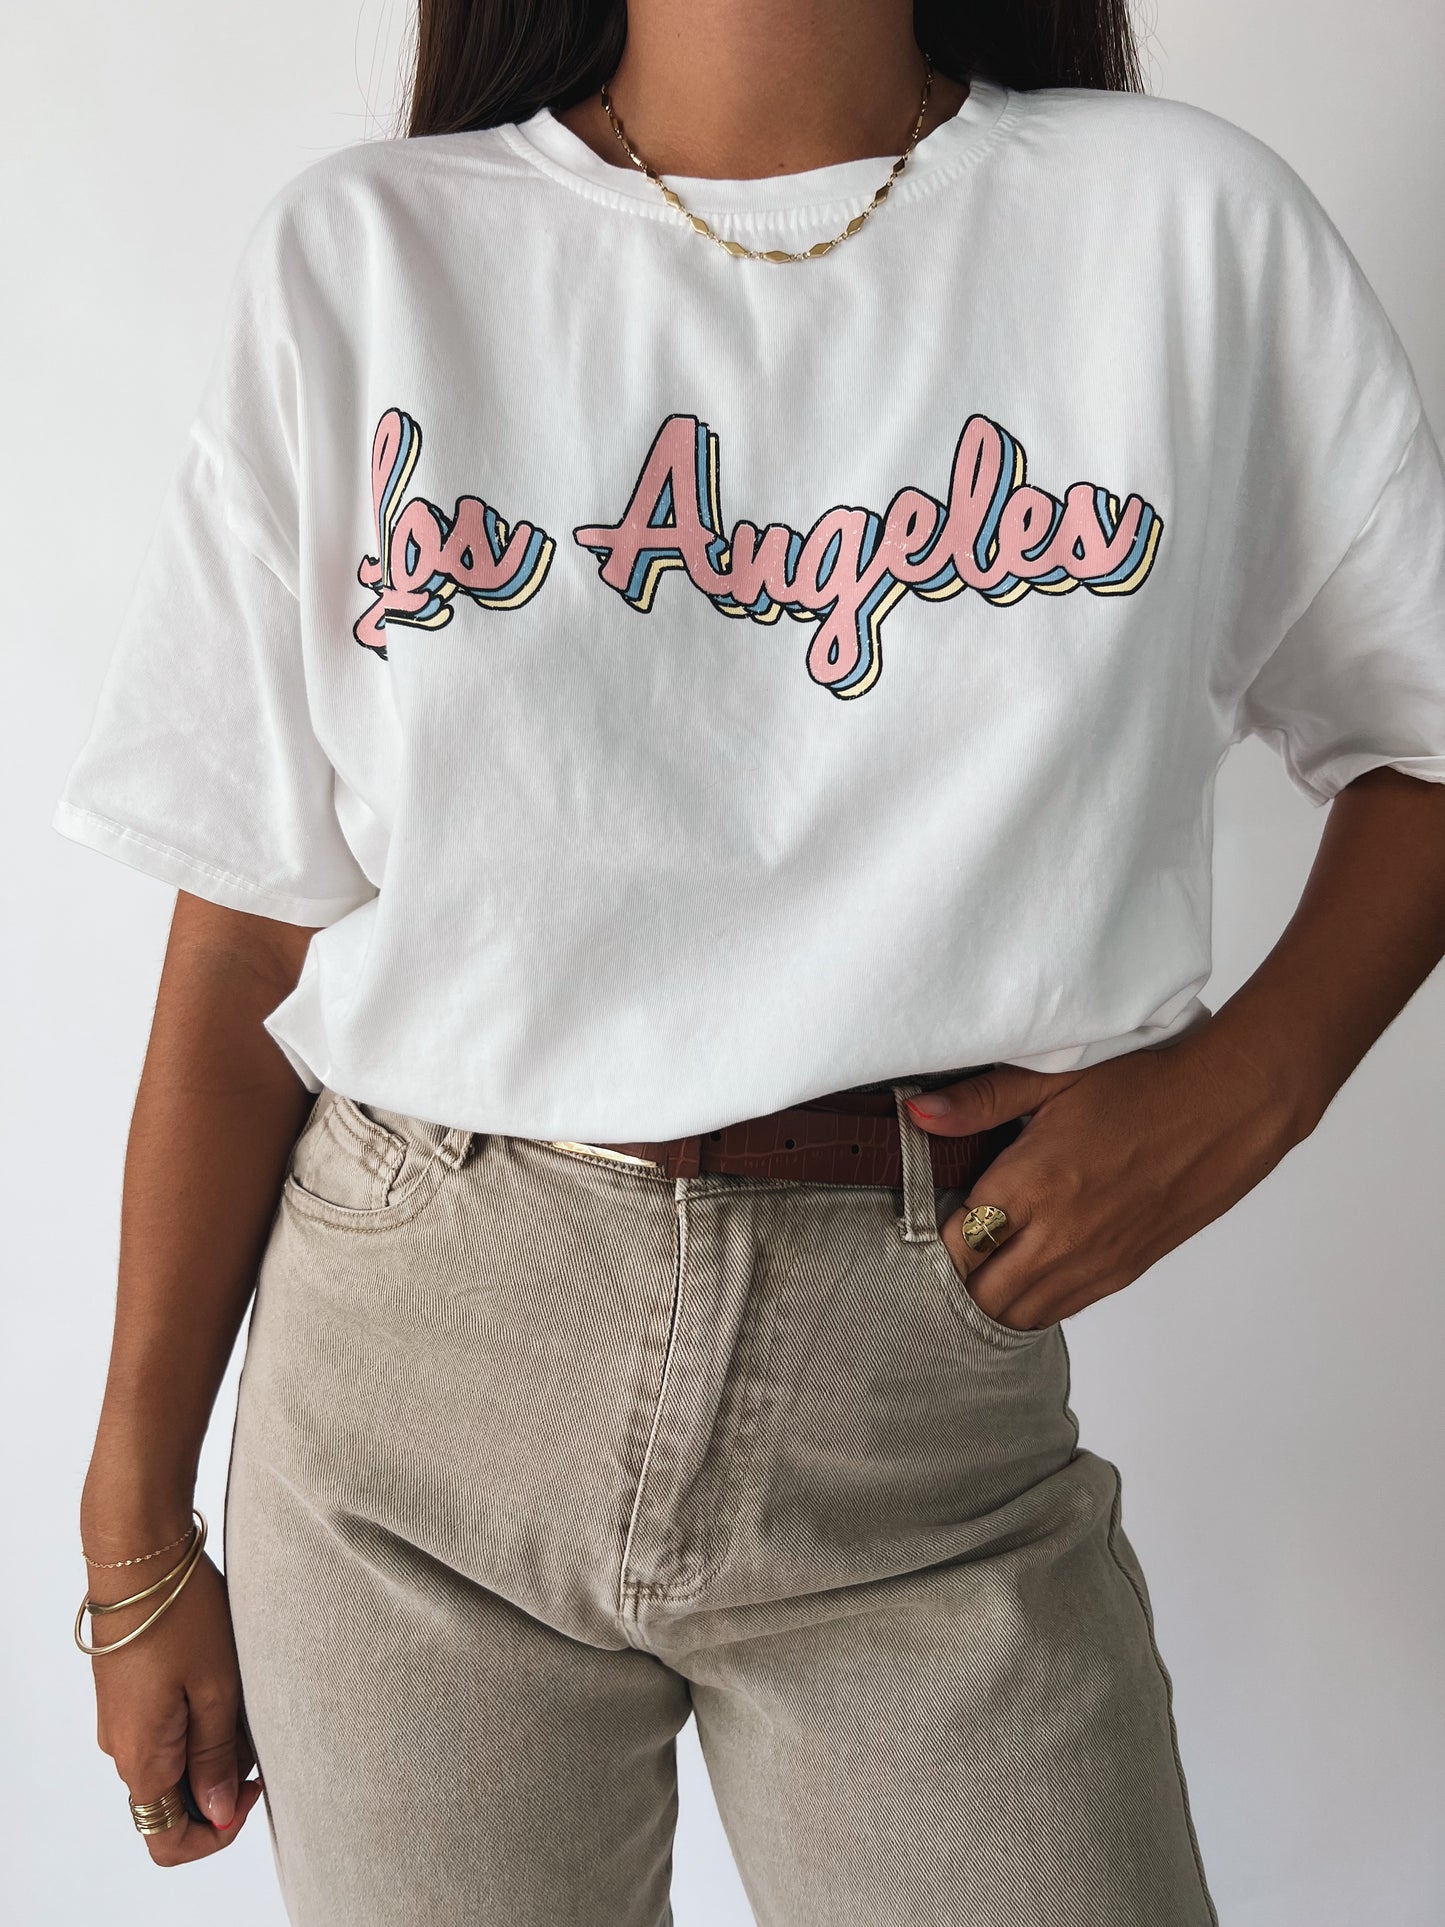 Tee-shirt Los Angeles - Anemone Store